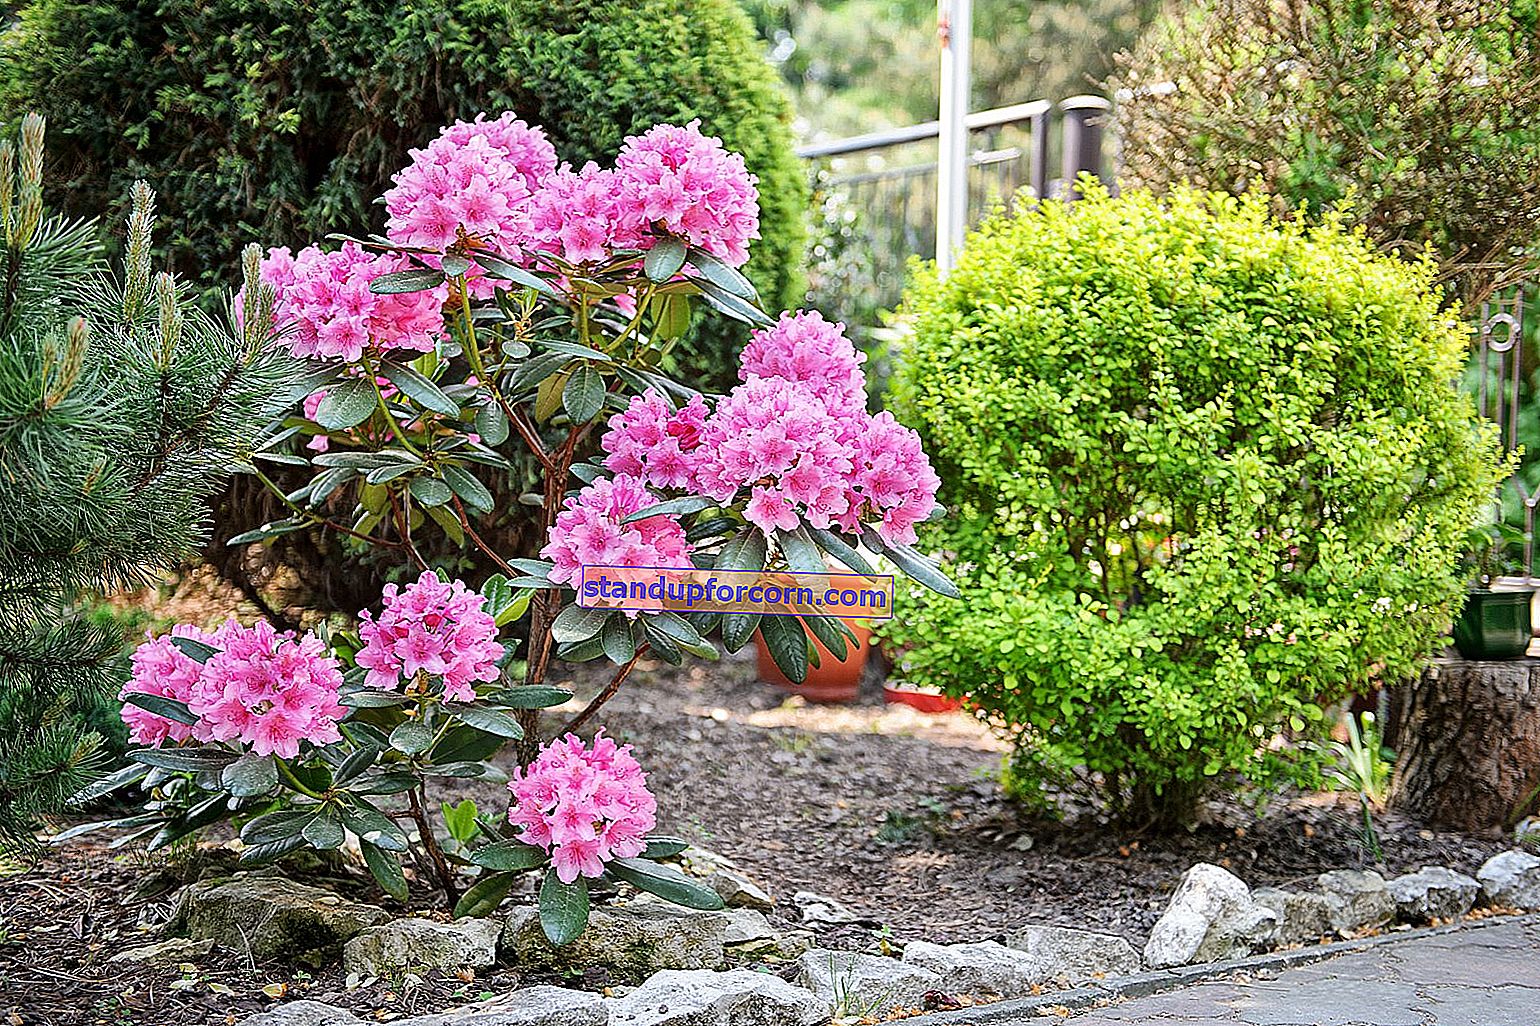 Rhododendron, rhododendron - dyrking, stell, reproduksjon